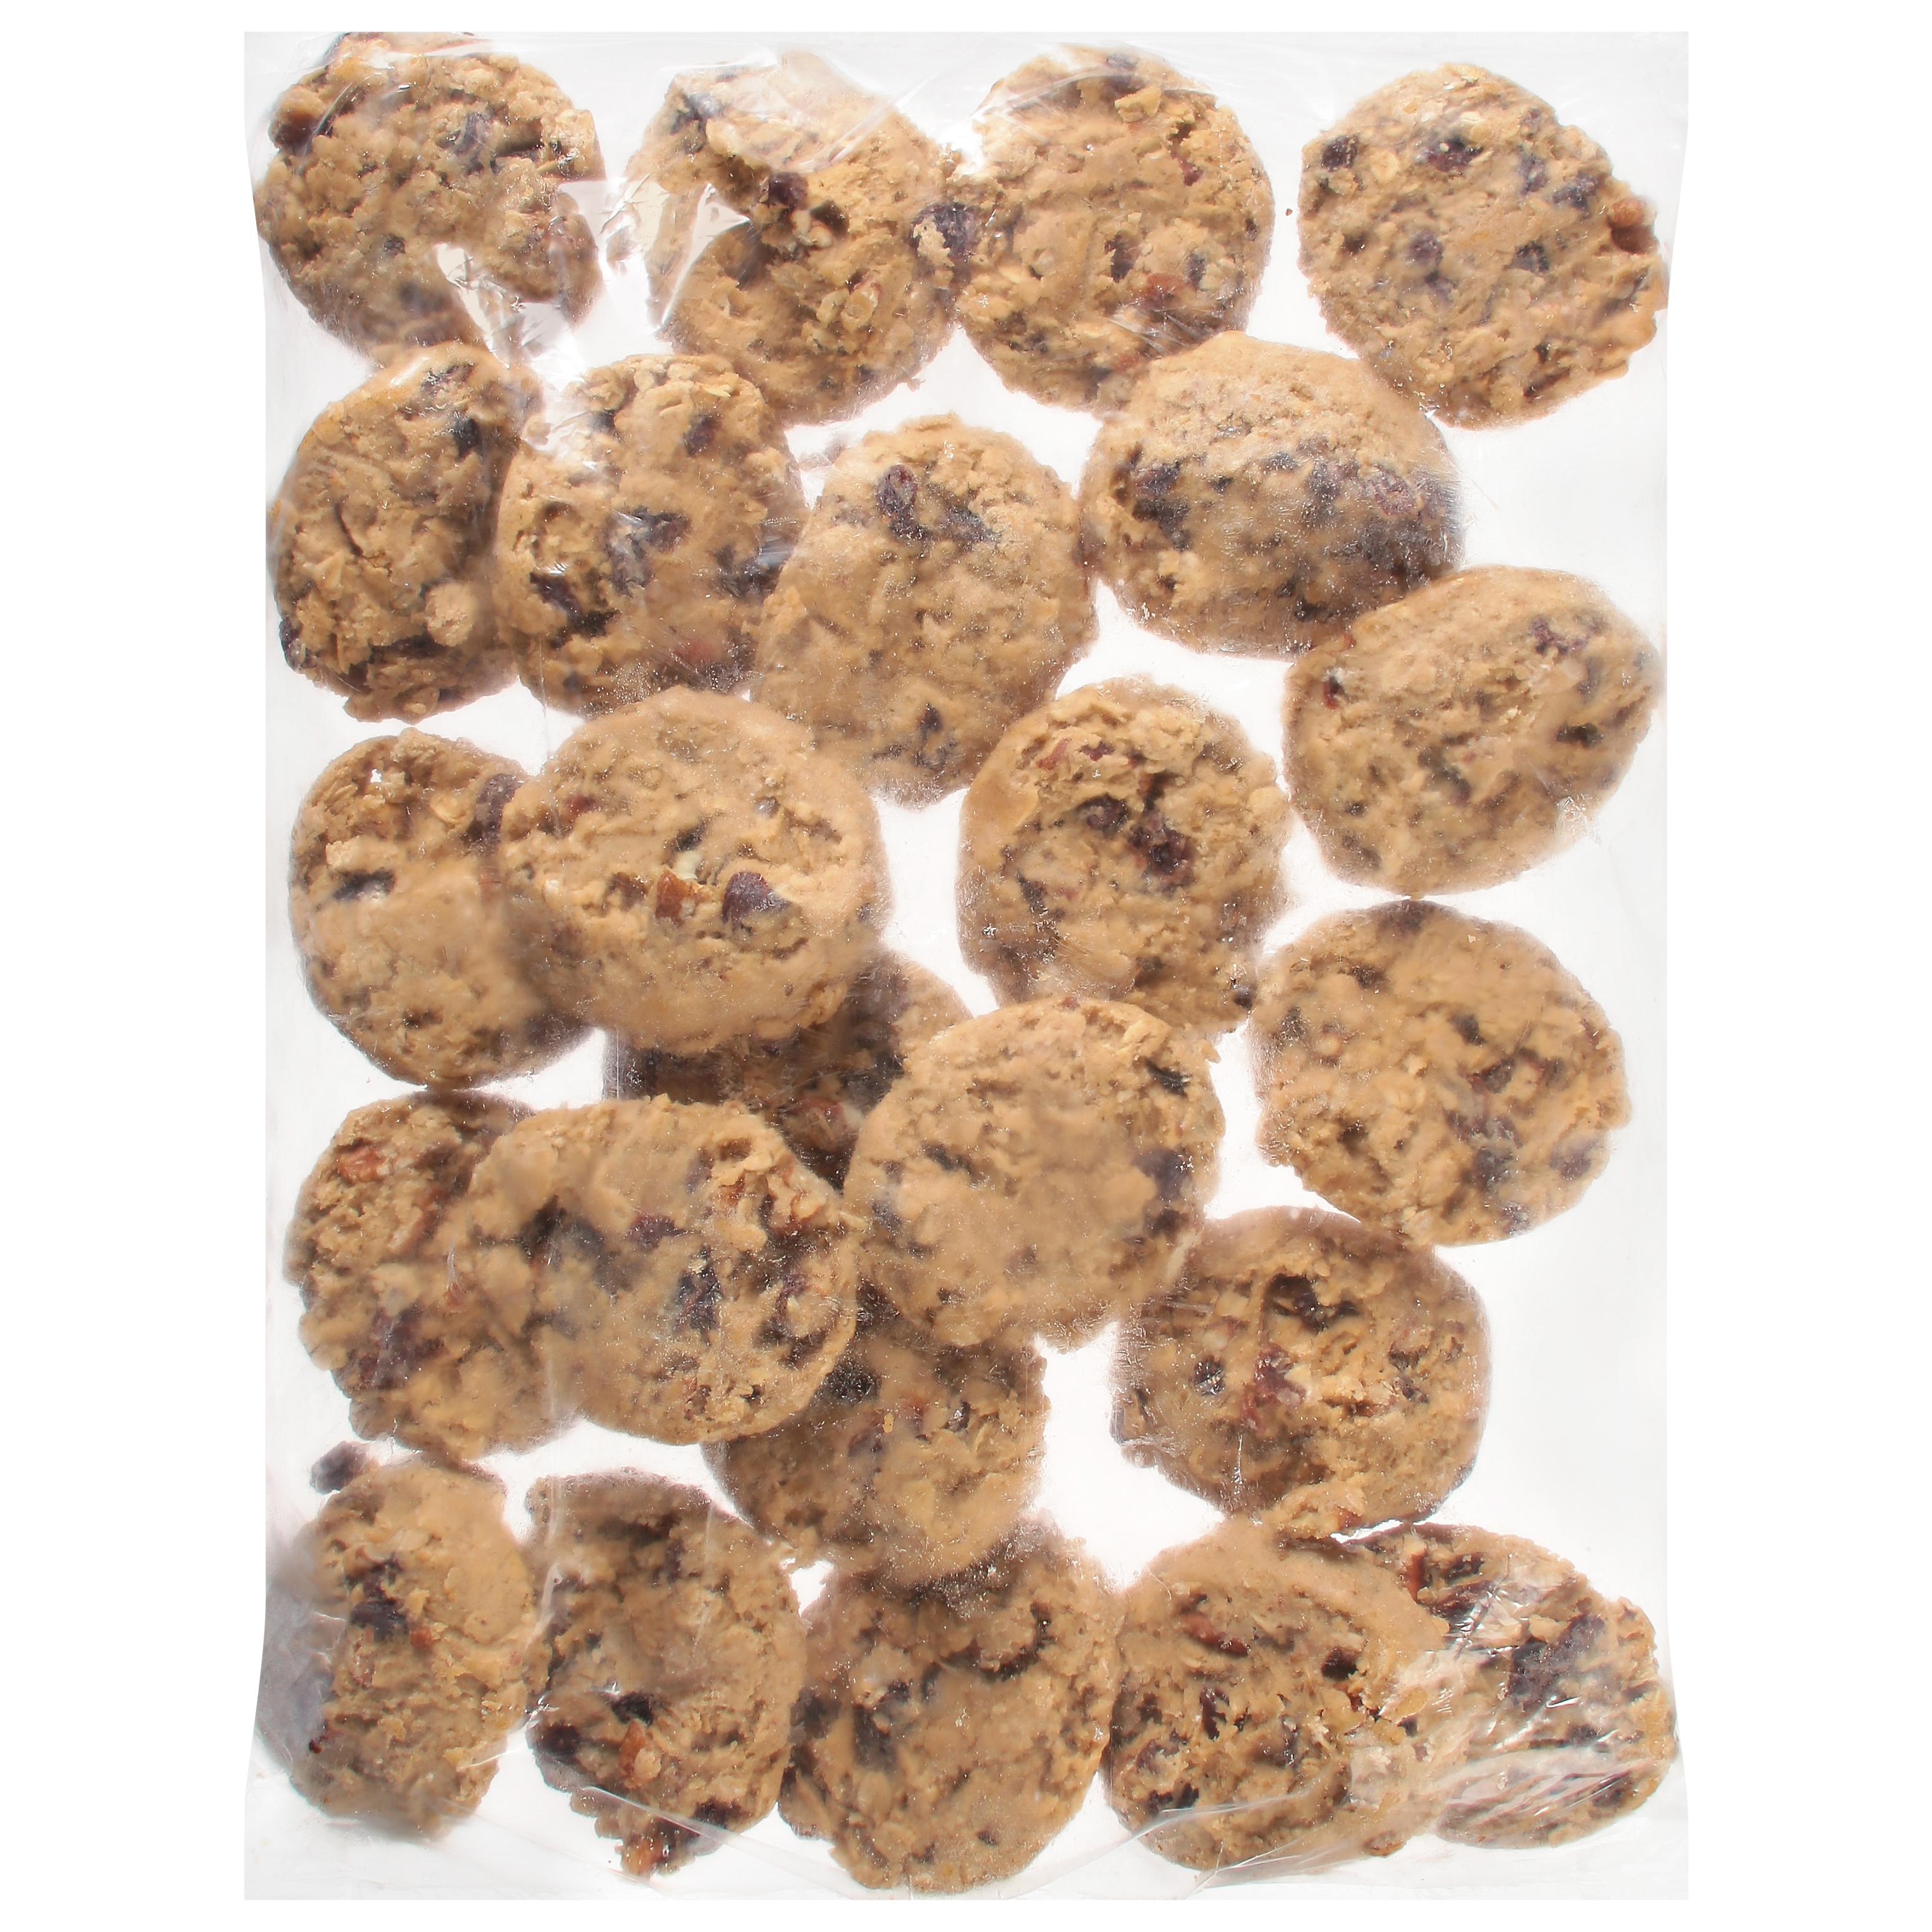 Oatmeal Raisin Pecan Cookies